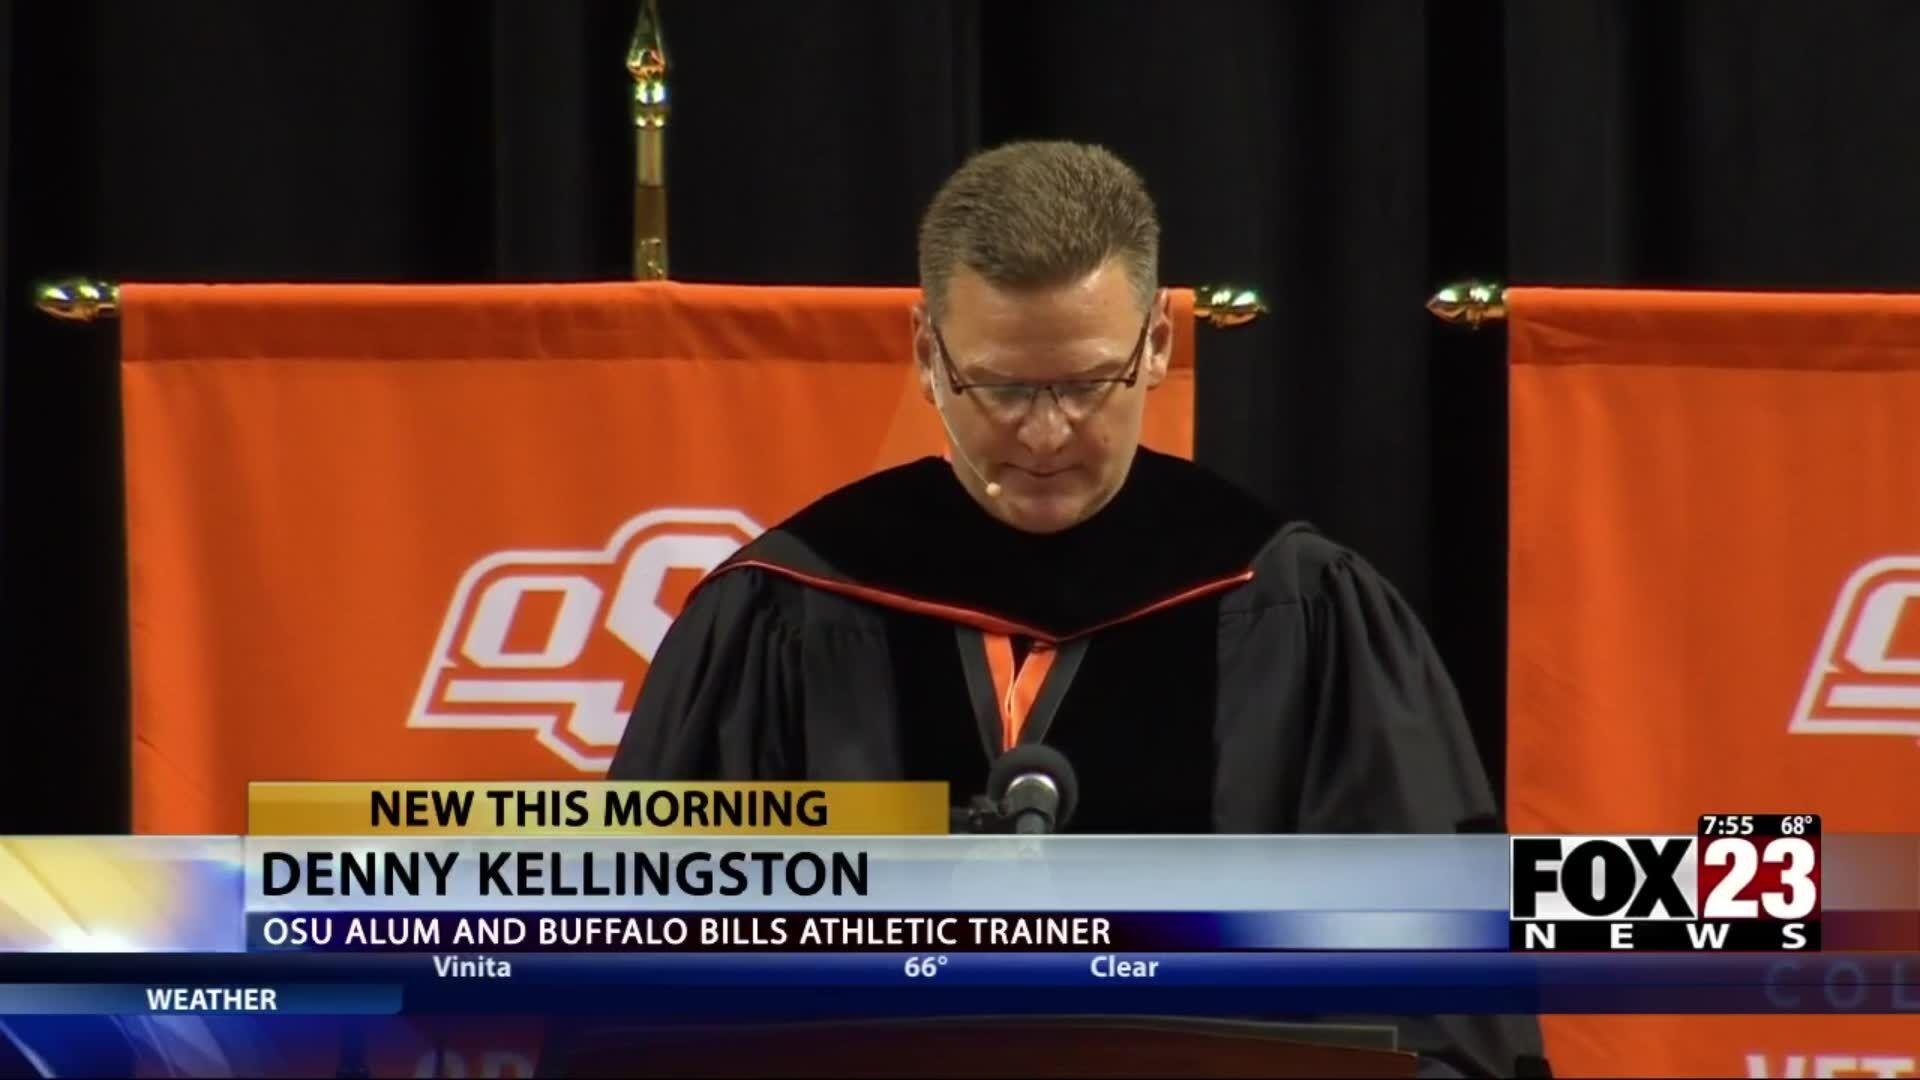 Bills athletic trainer, OSU alumnus Kellington to speak at spring  graduation